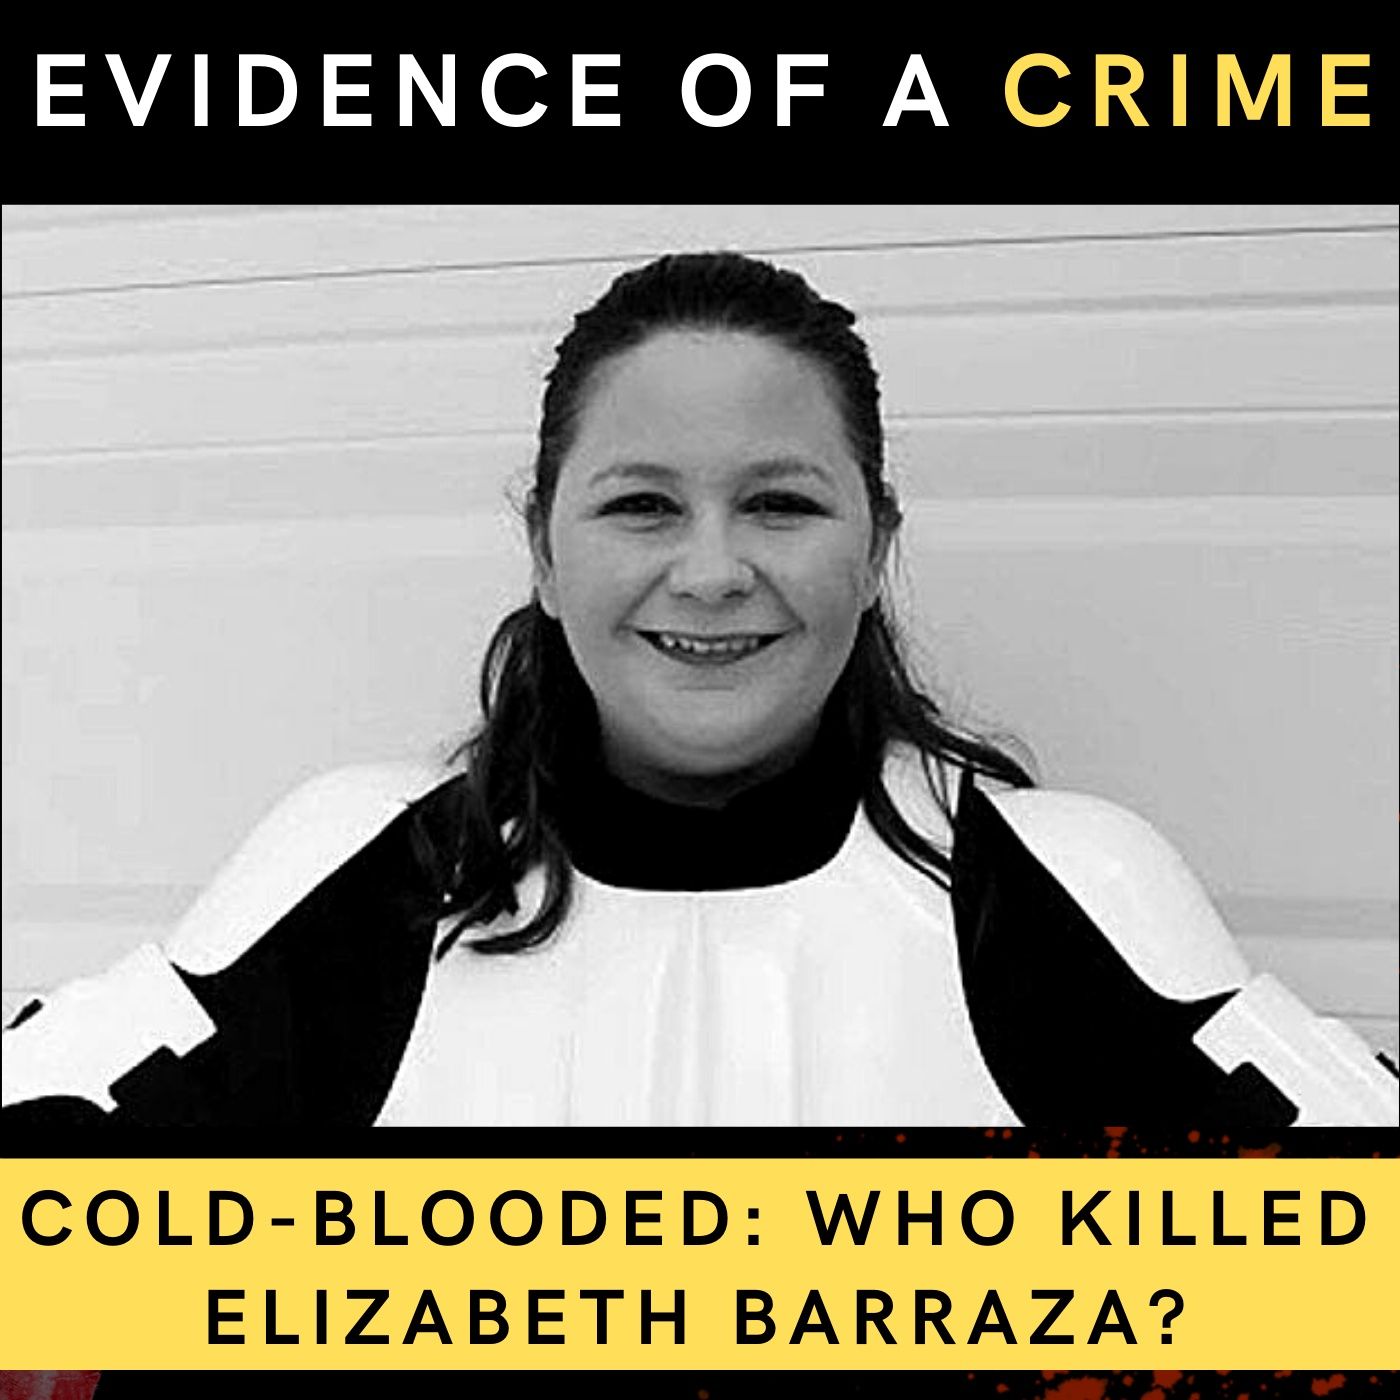 16. Cold-Blooded: Who Killed Elizabeth Barraza?